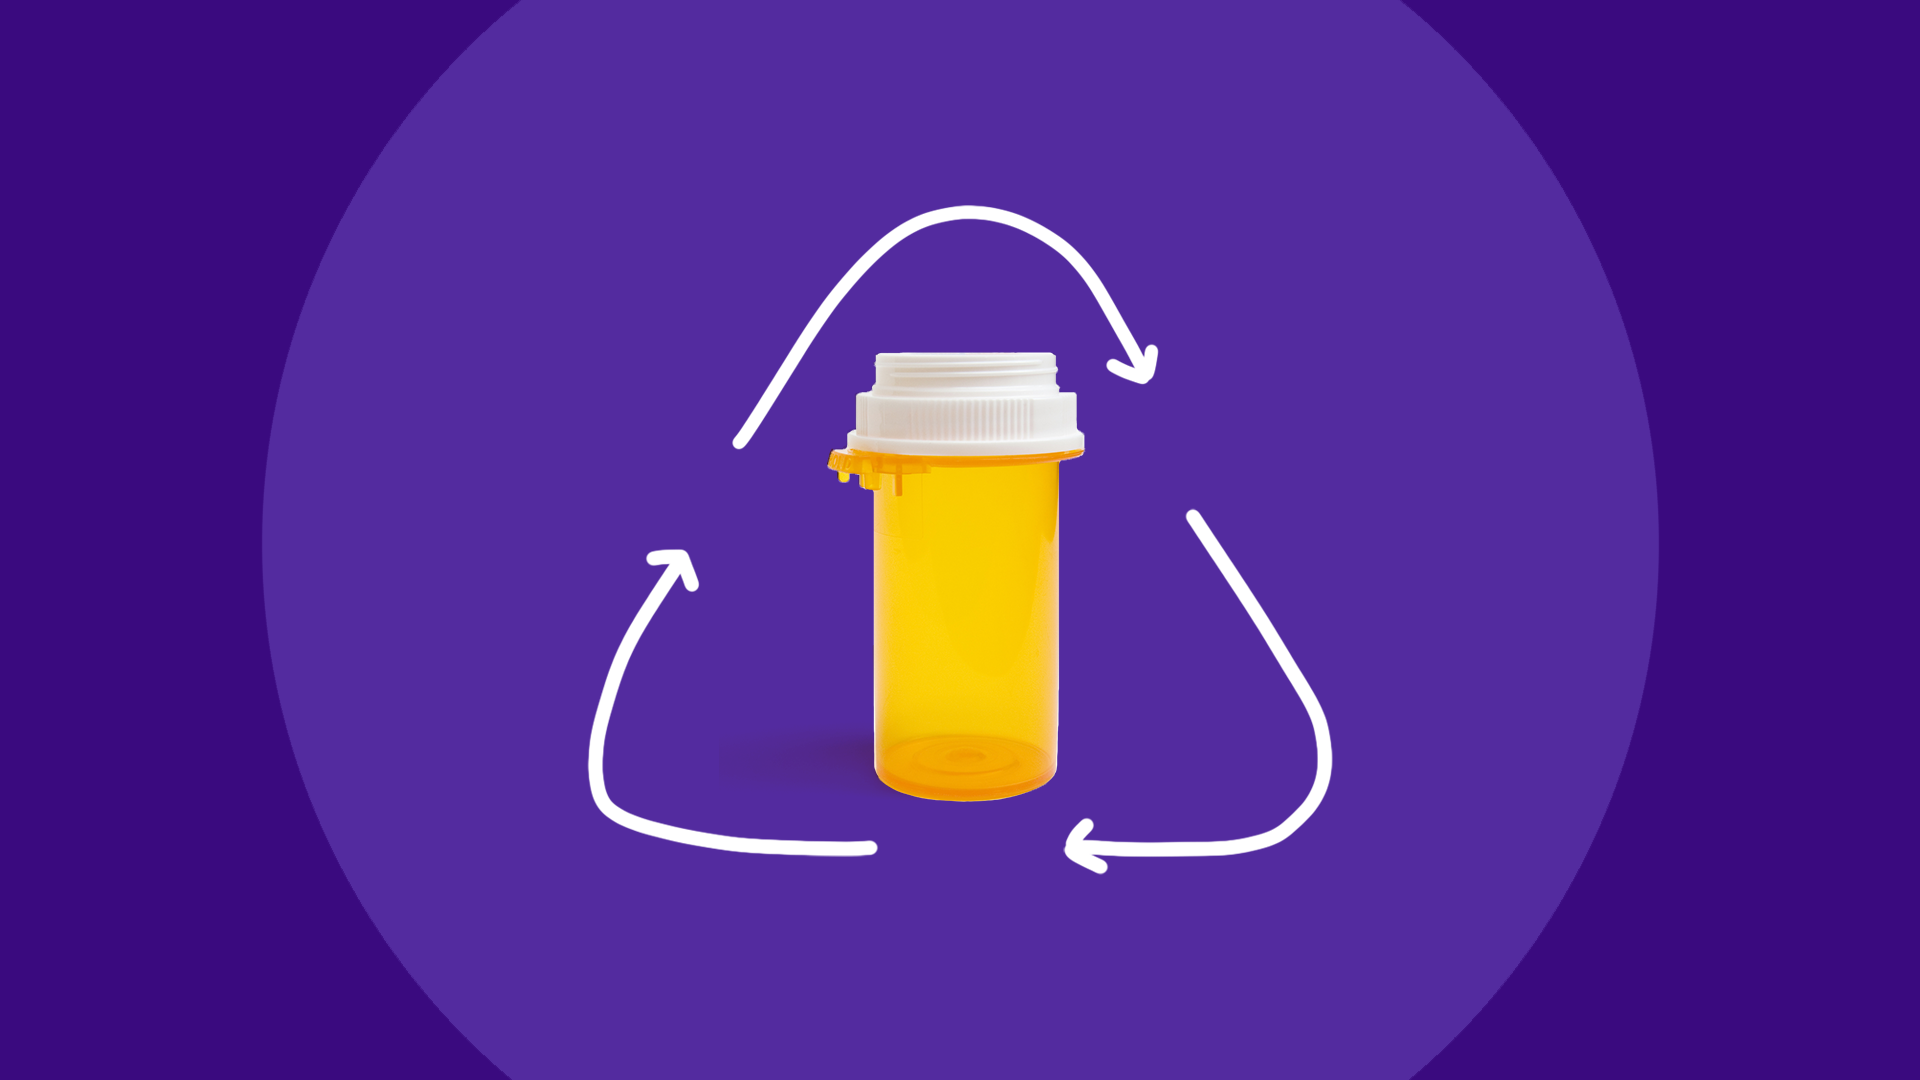 https://www.singlecare.com/blog/wp-content/uploads/2019/11/Blog_111519_Recycle_Used_Prescription_Bottles.png